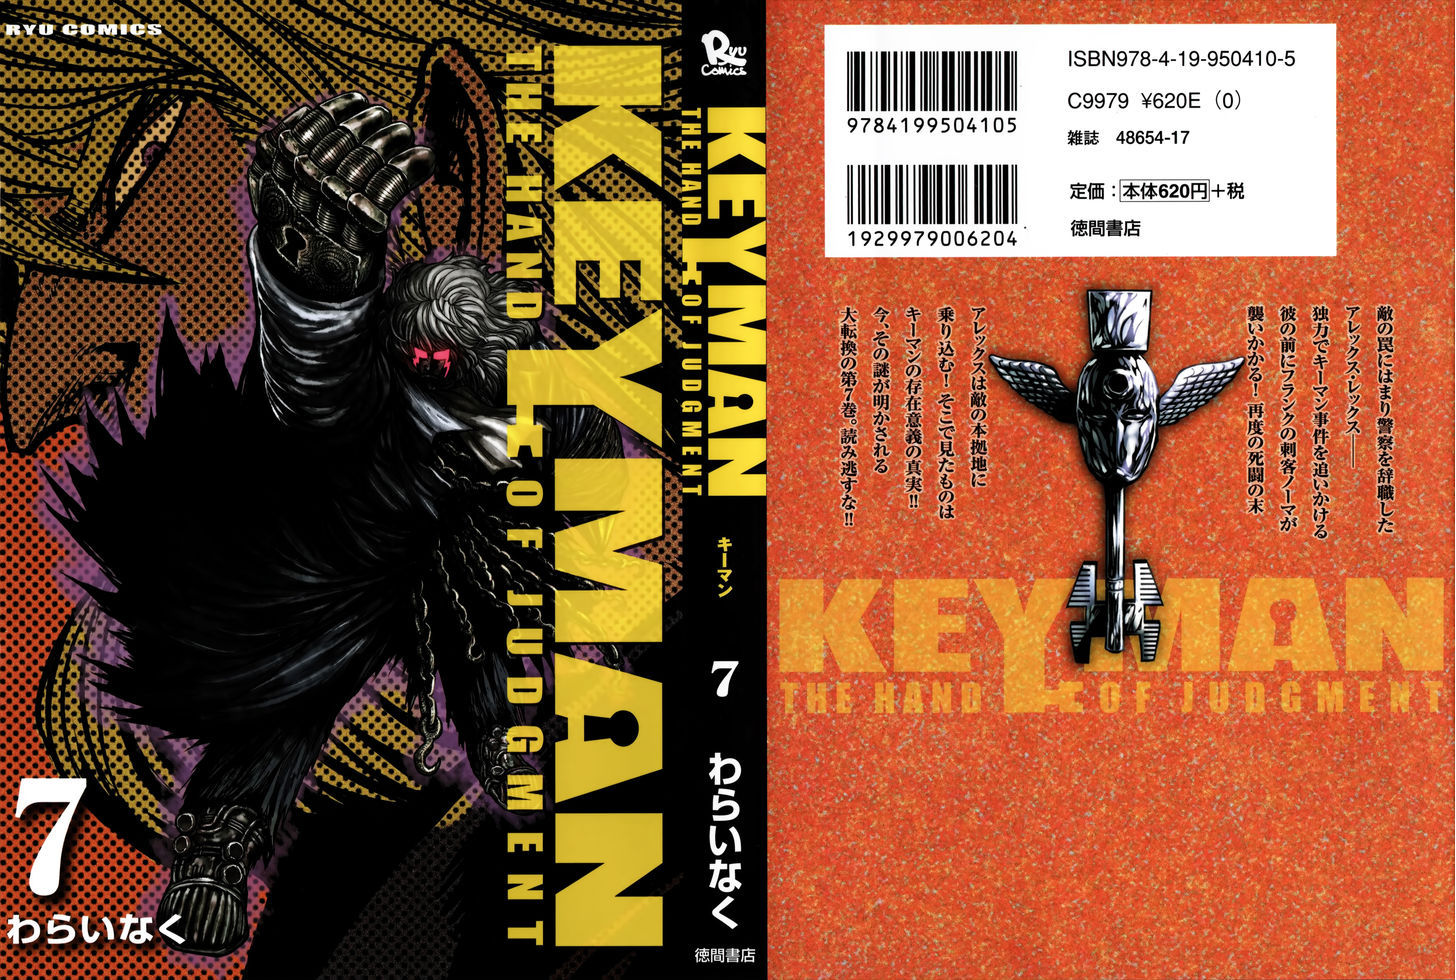 Keyman - The Hand of Judgement 30